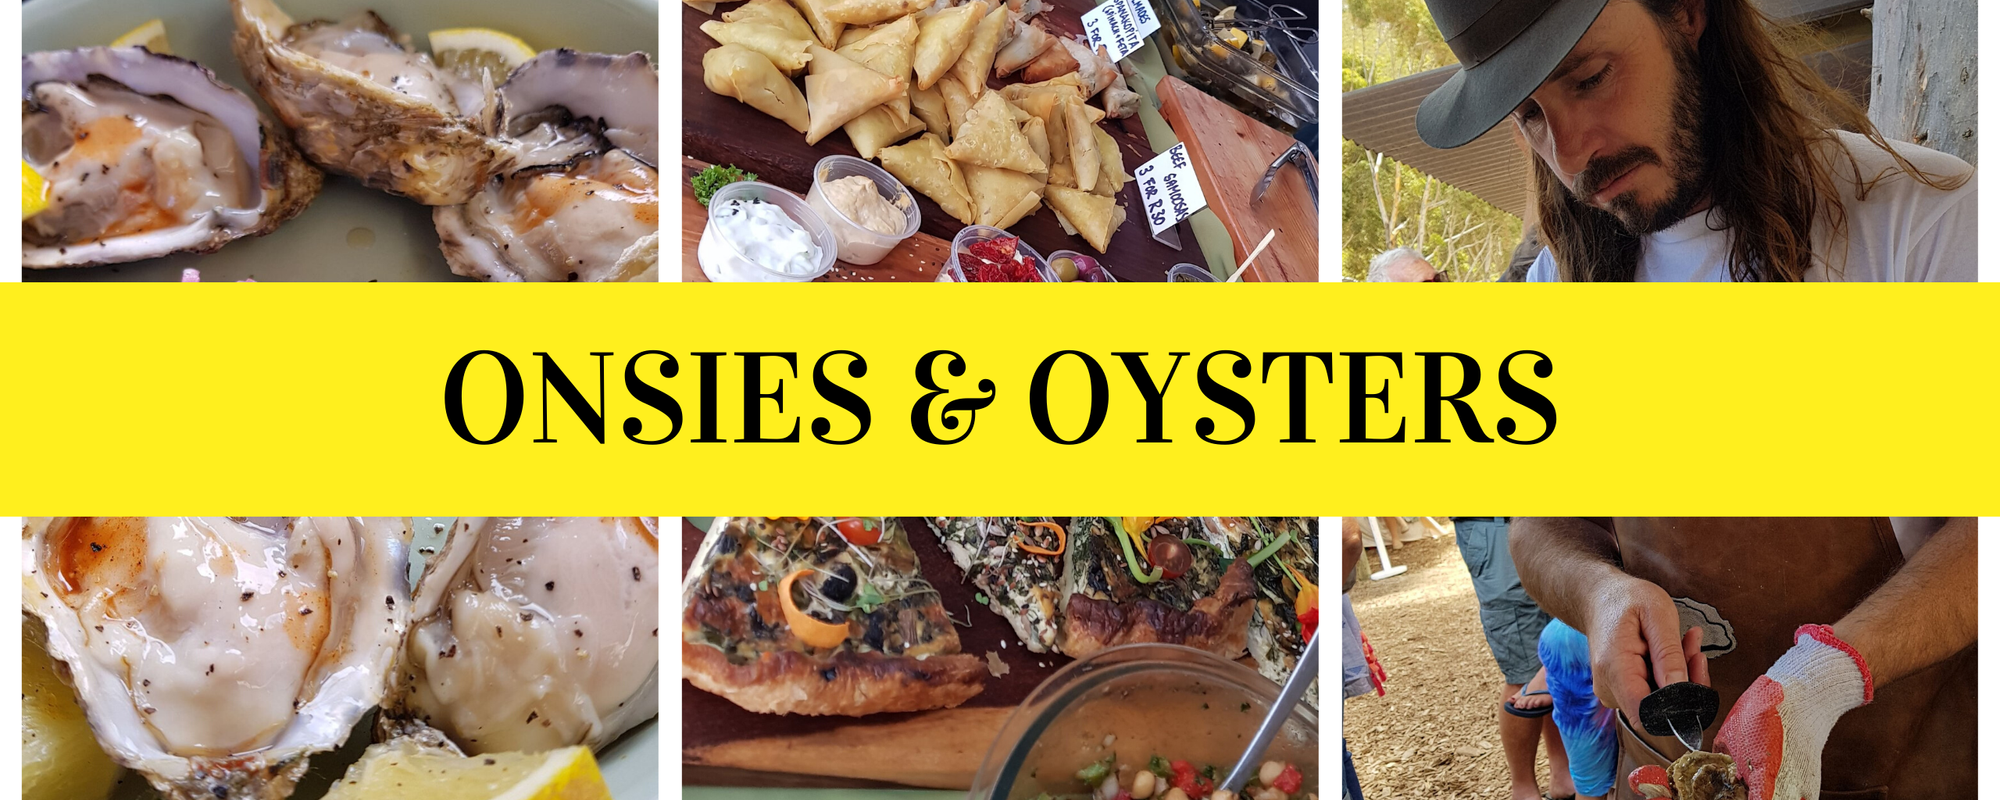 Onsies & Oysters - #showcase-sunday